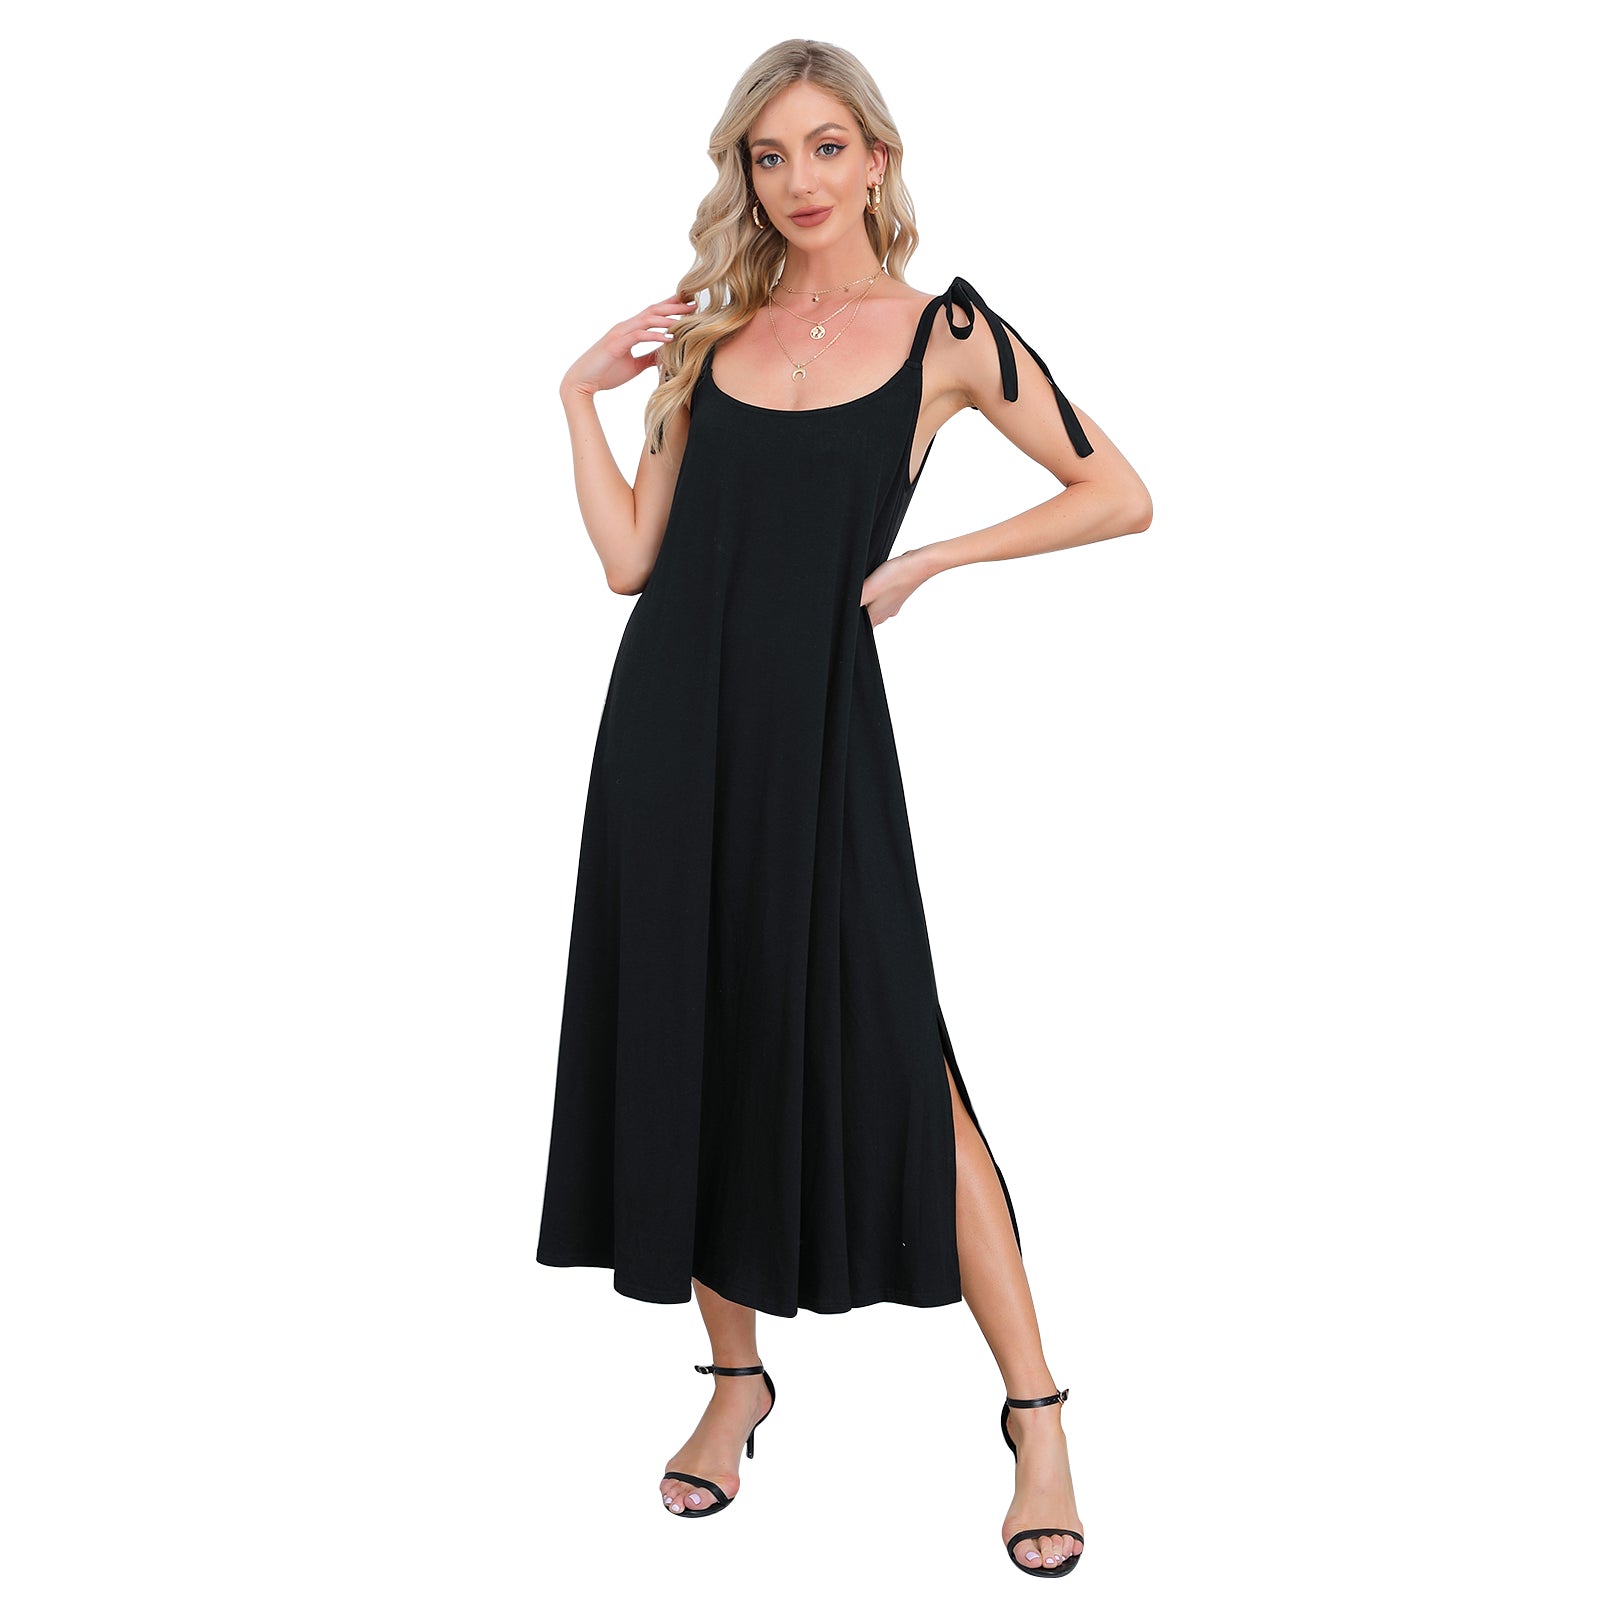 Sexy Black Strappy Dress - Scoop Neckline / Adjustable Straps / Trim Body  Fit / Back Strap